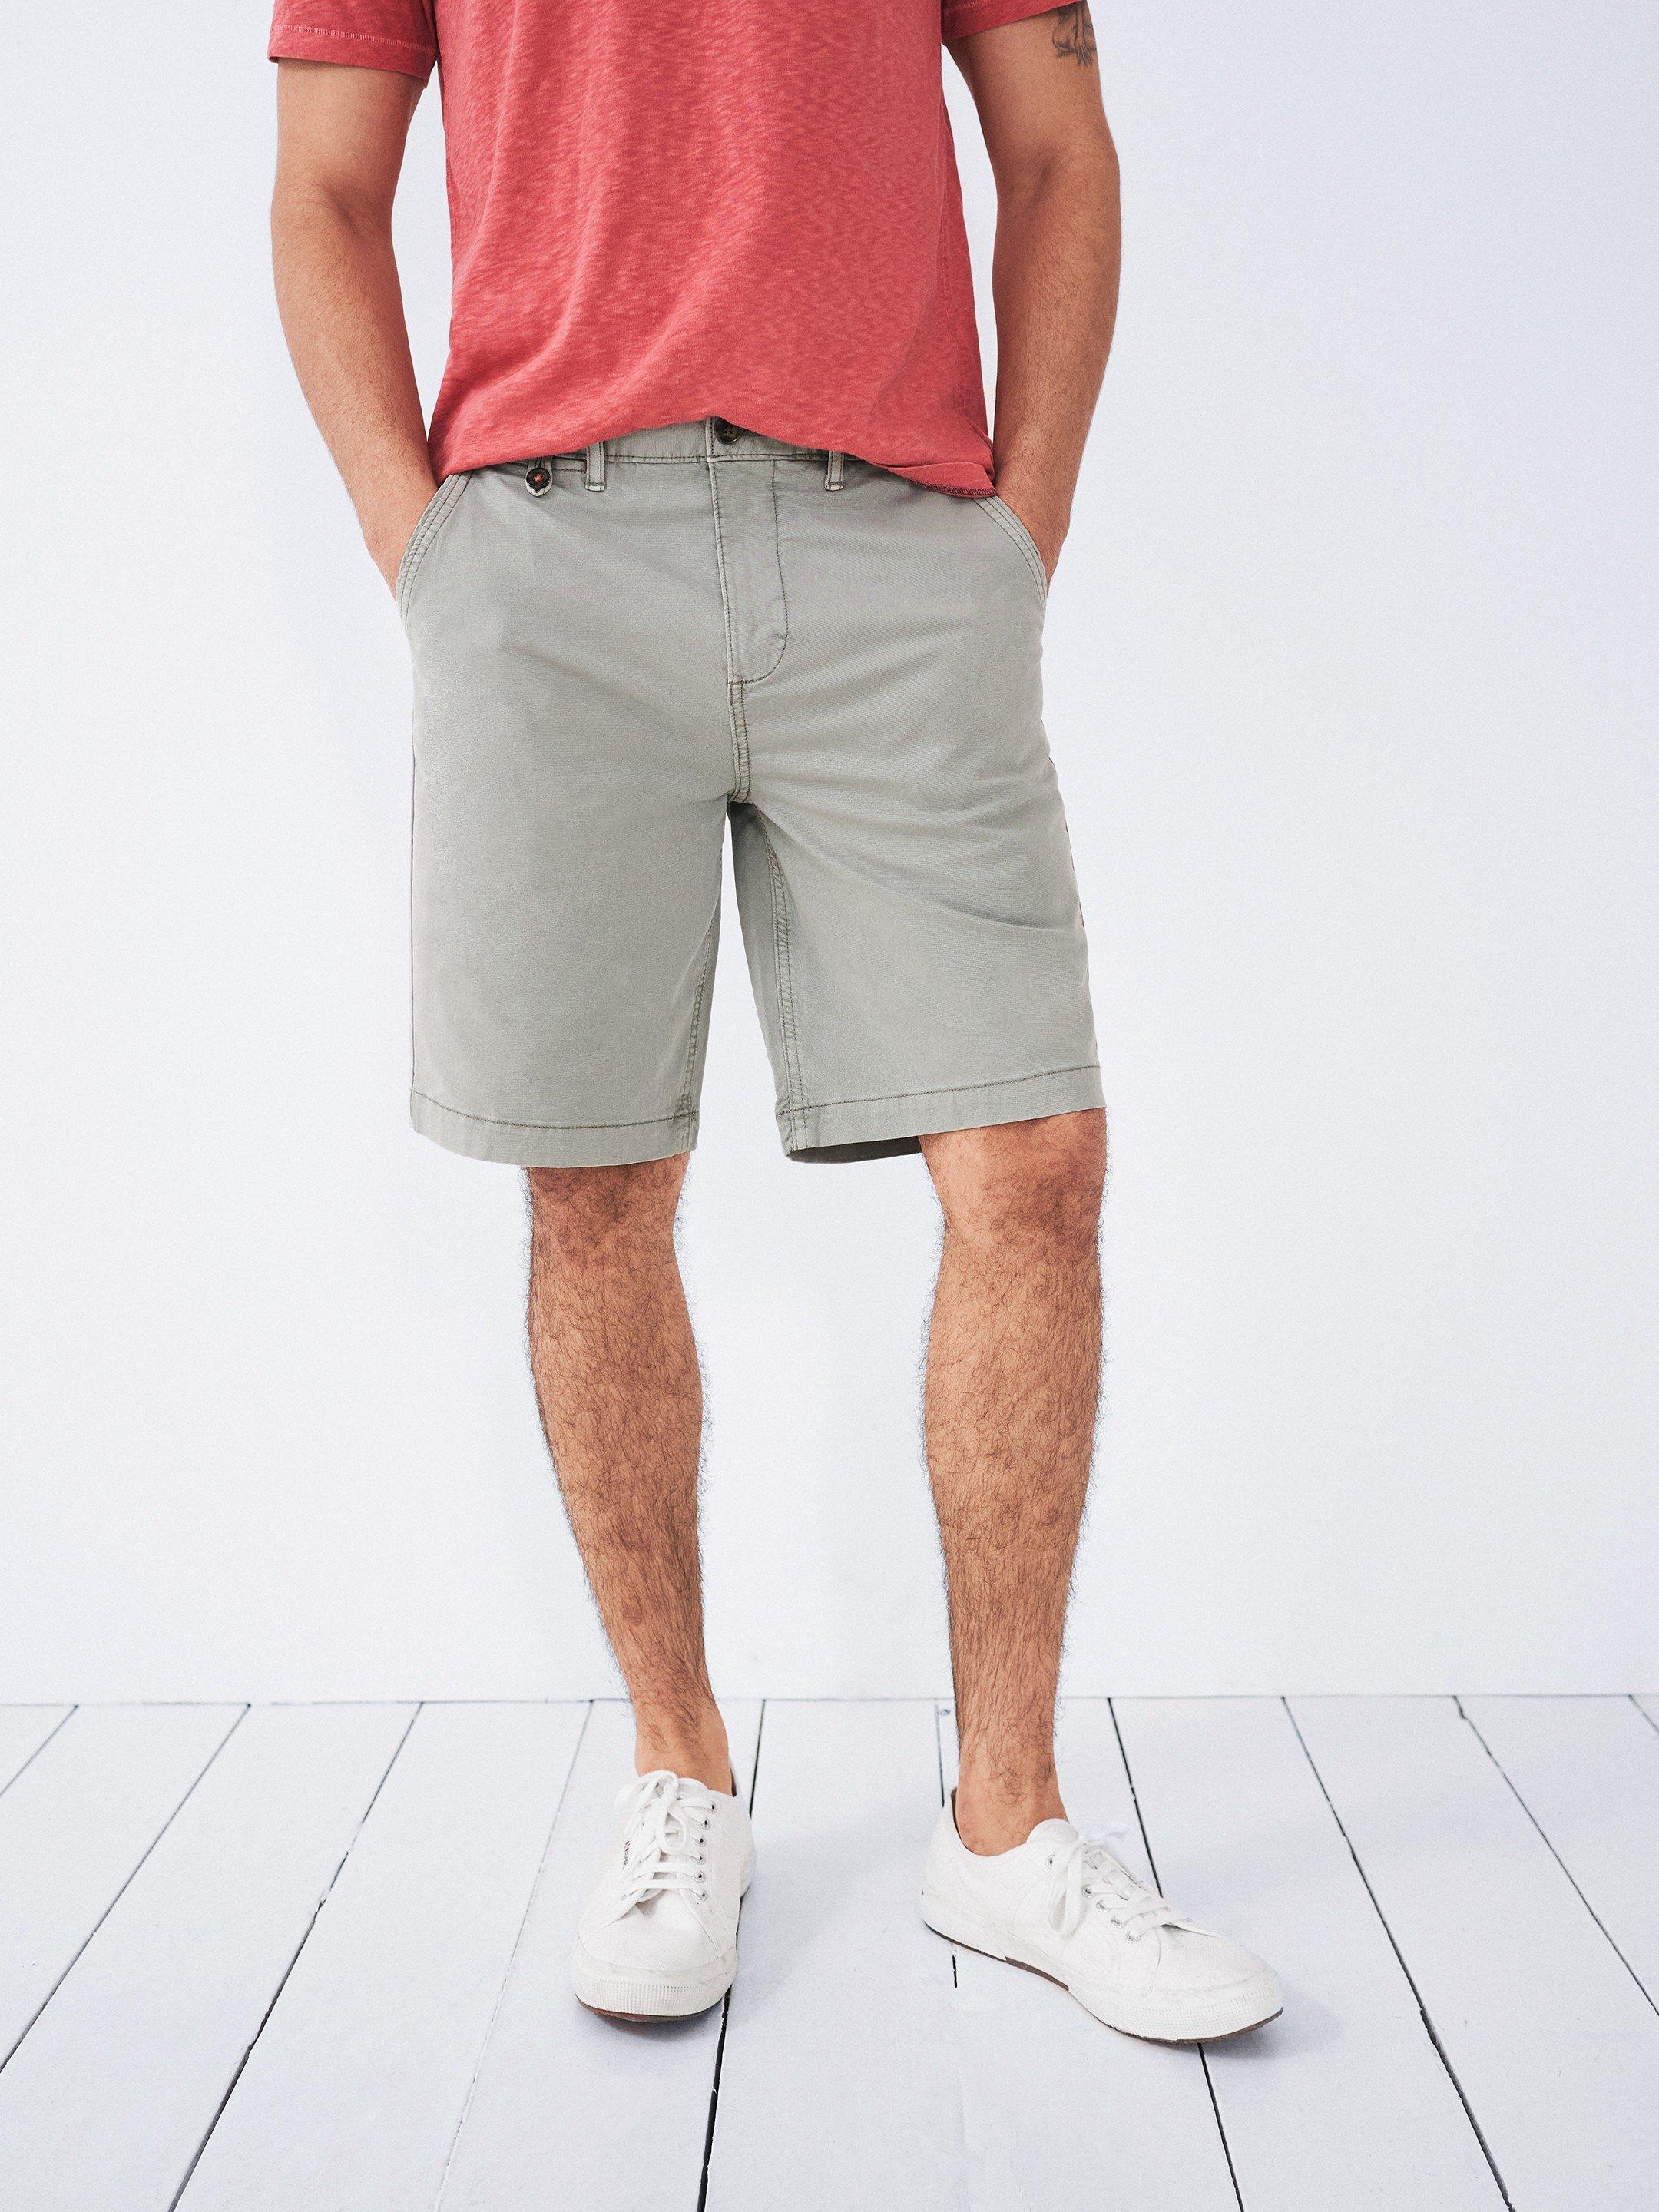 Sutton Organic Chino Shorts in LGT GREY - MODEL DETAIL